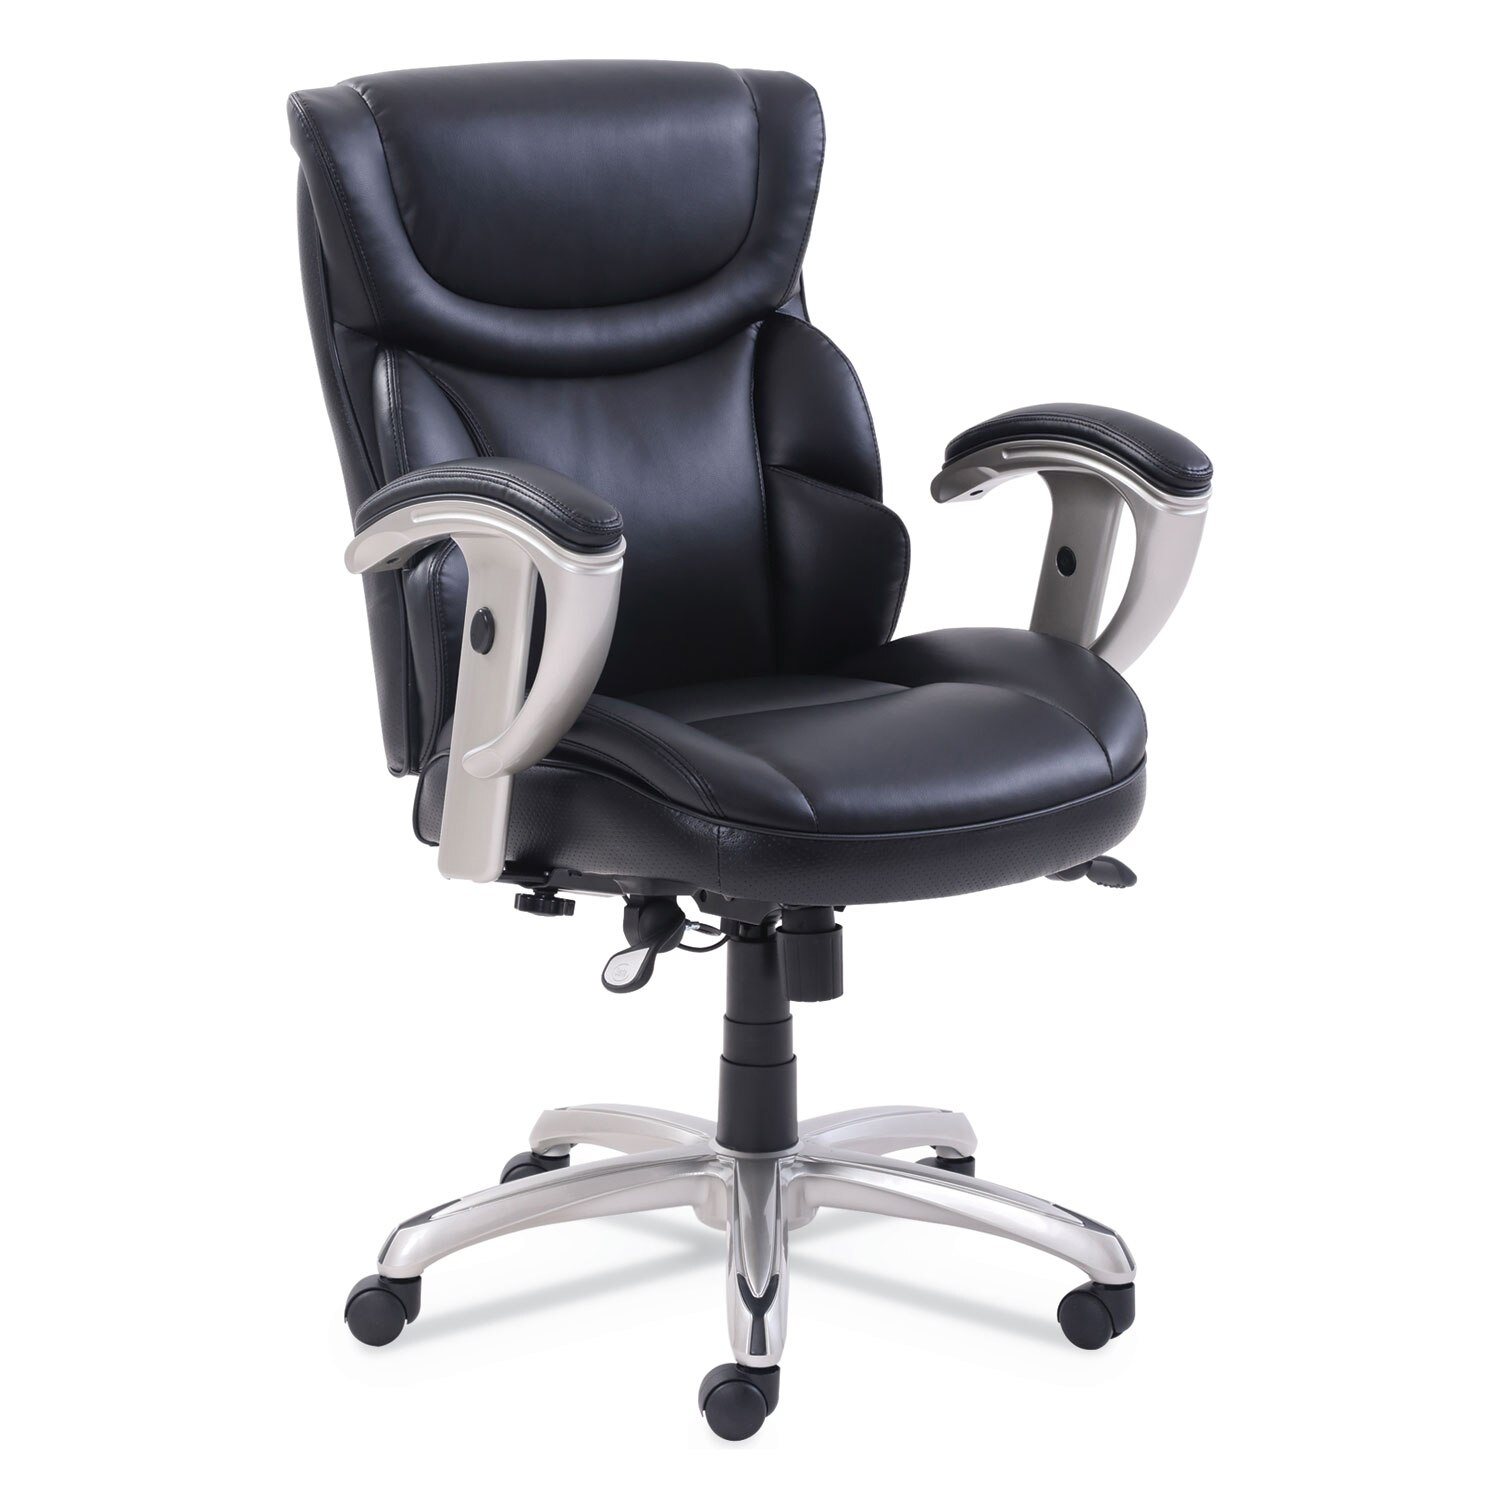 Sertapedic cosset ergonomic task chair walmart